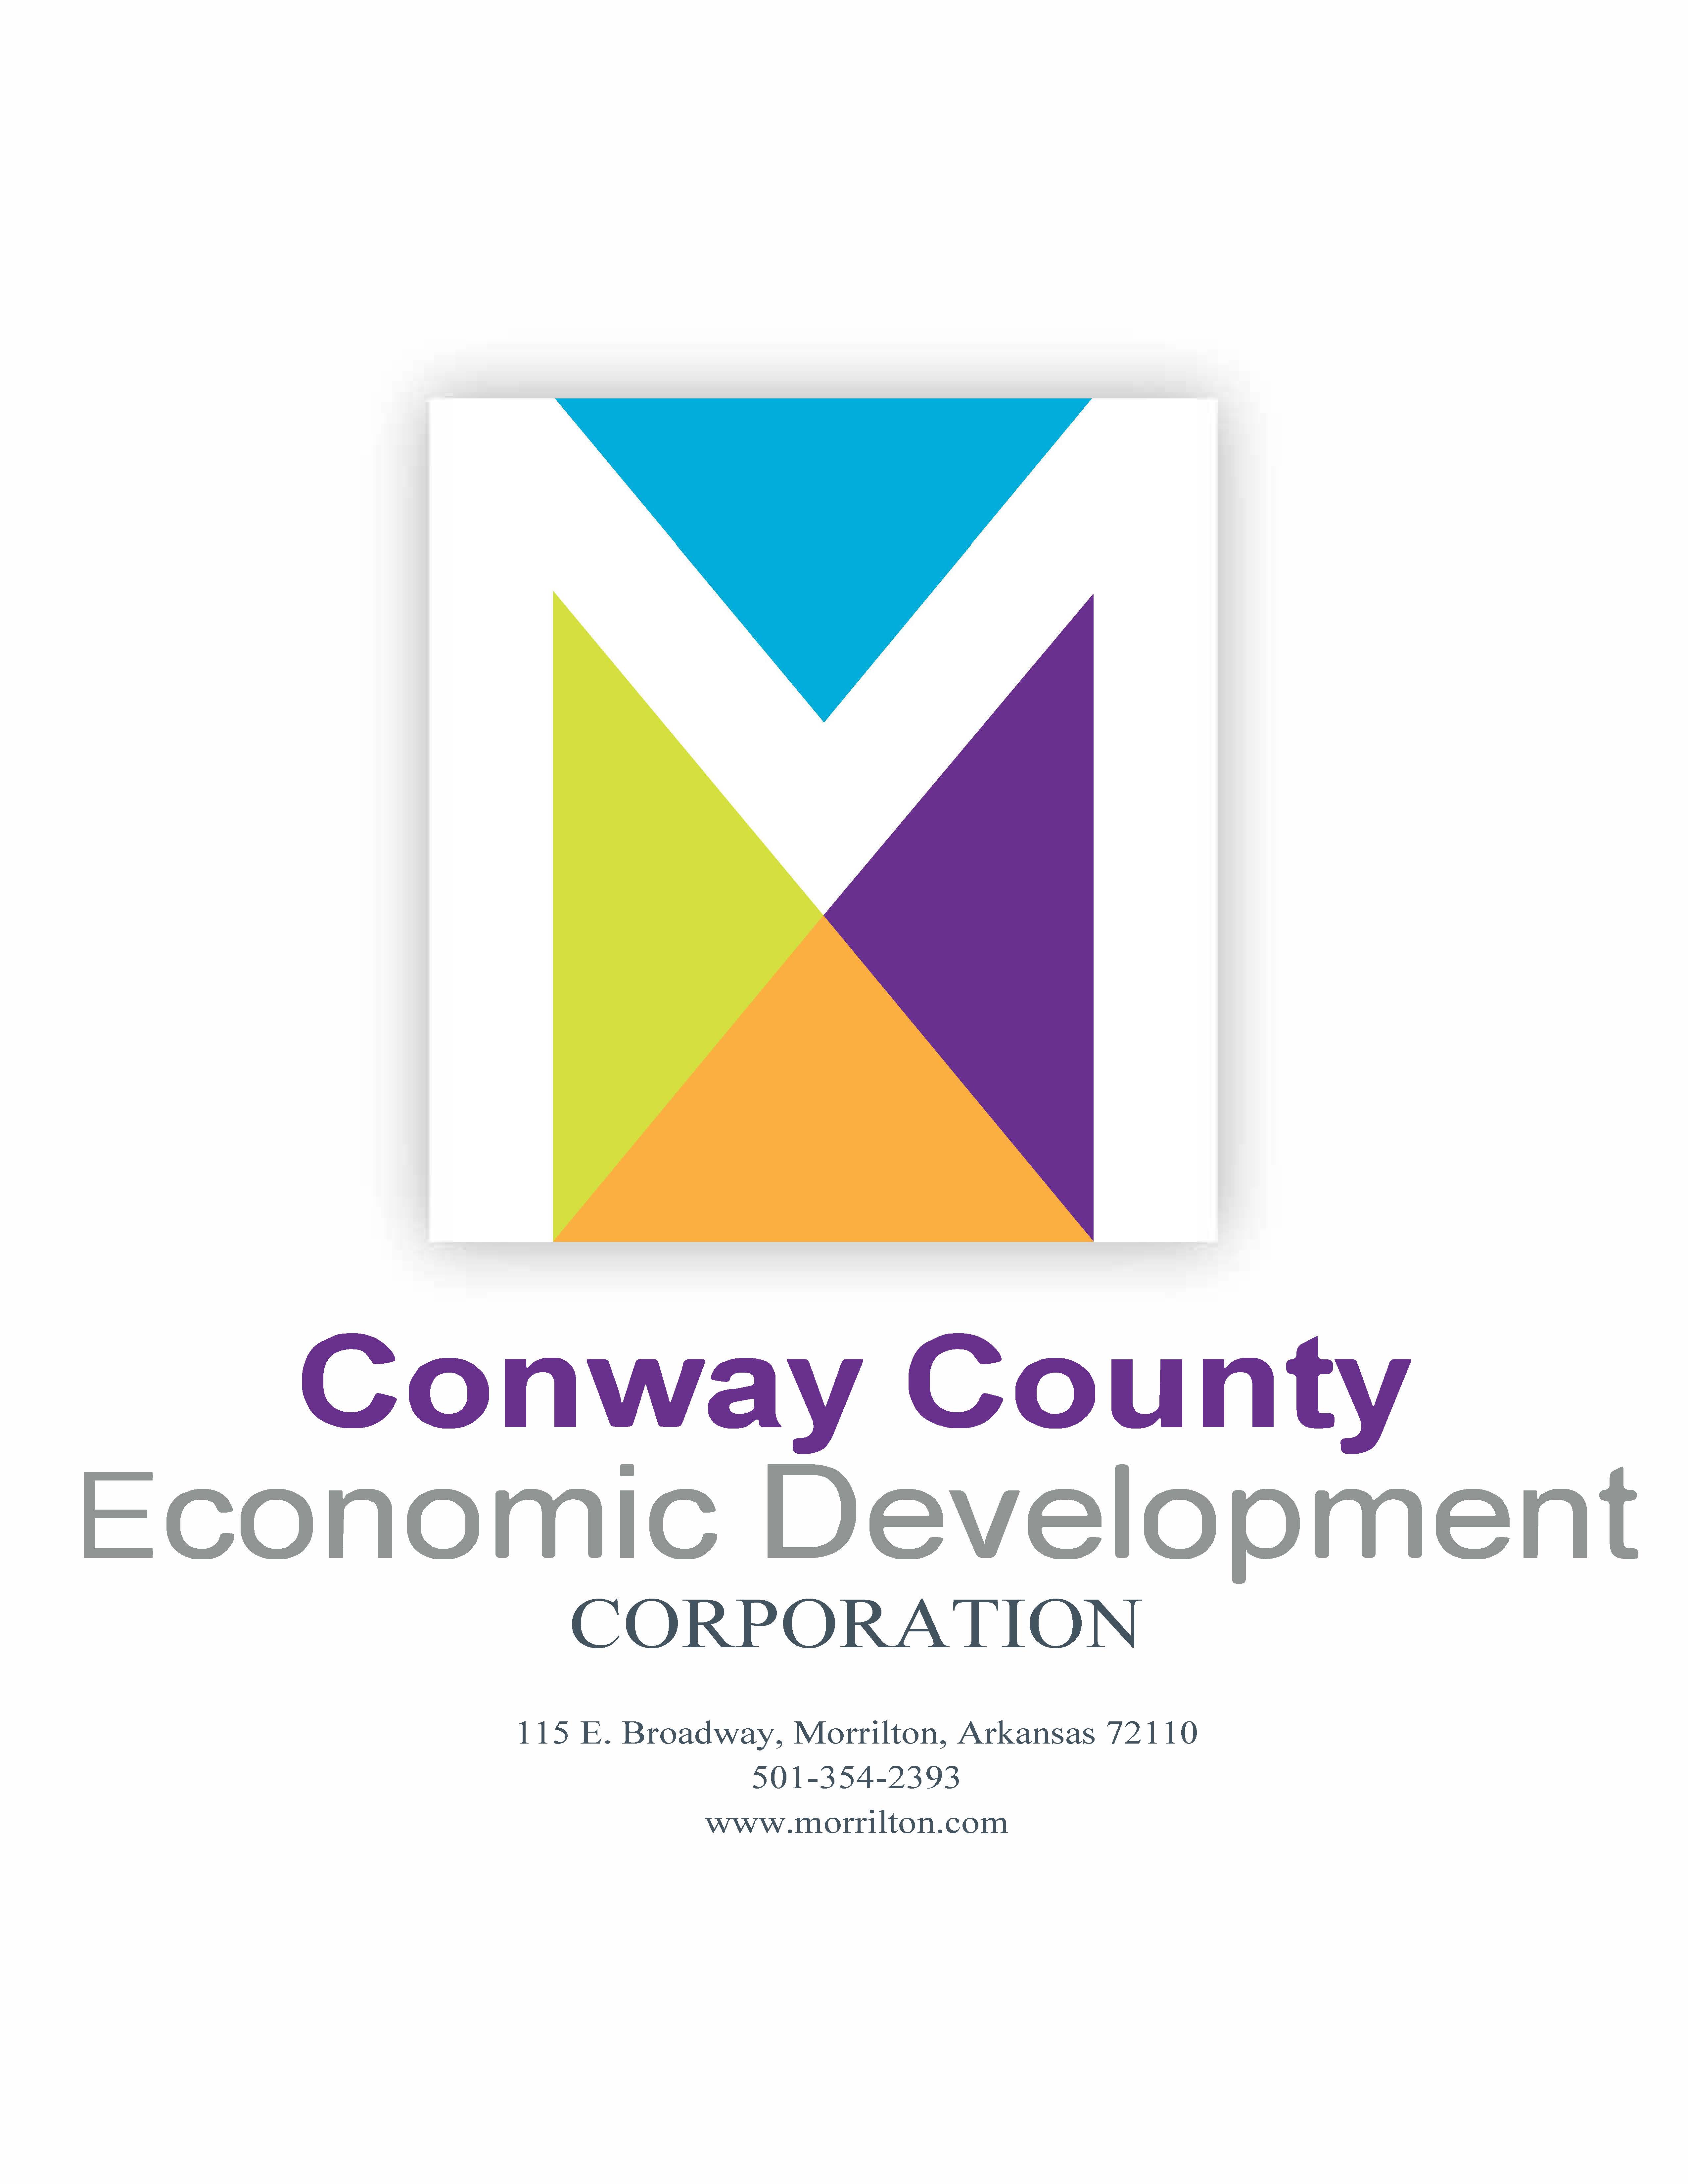 Morrilton Area Chamber of Commerce & Conway County Economic Development Corporation